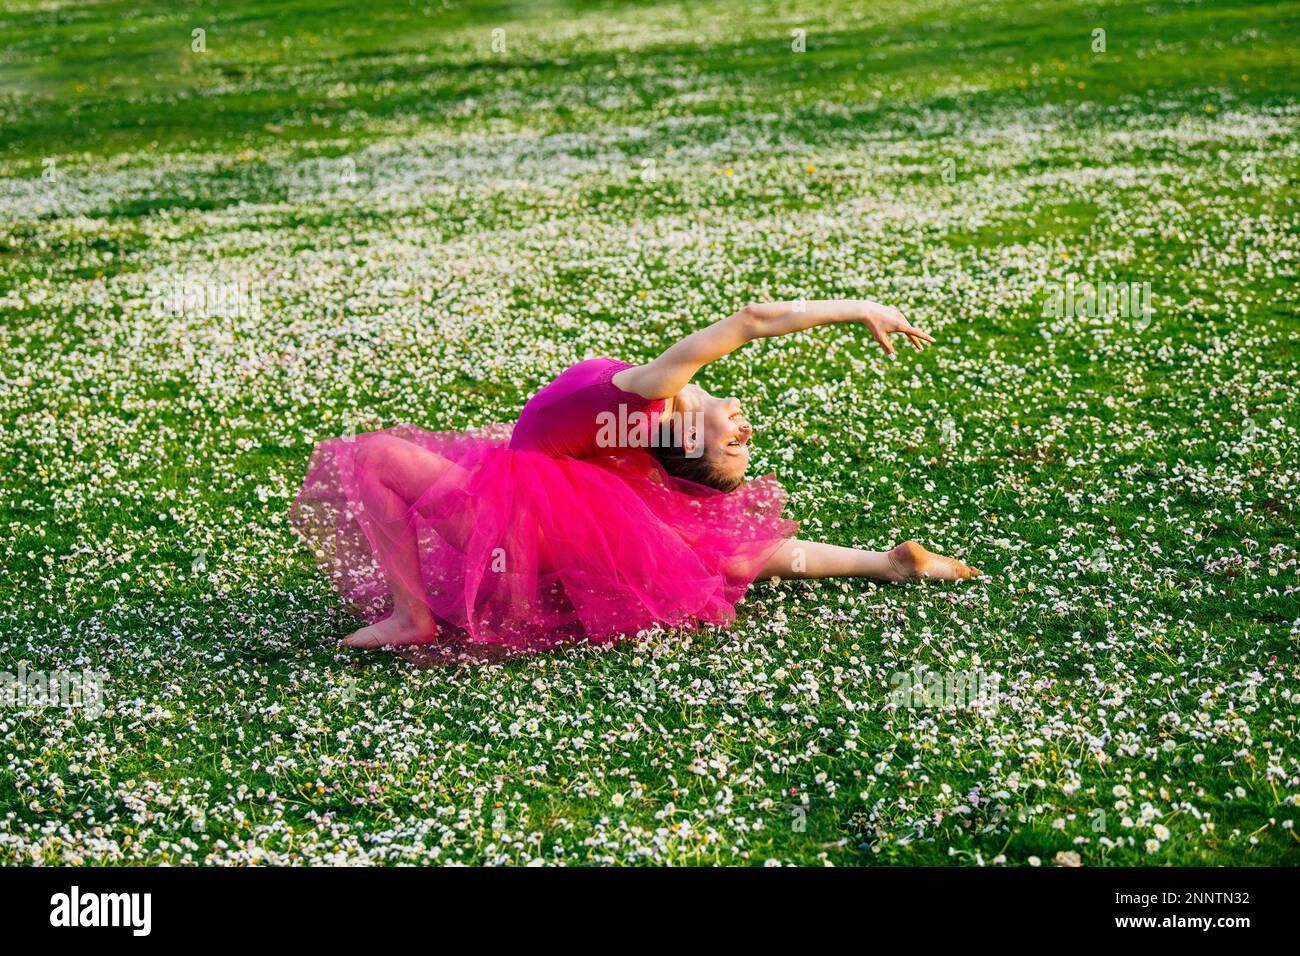 Ballerina doing splits on lawn with flowers, Battle Point Park, Bainbridge Island, Washington, USA Stock Photo